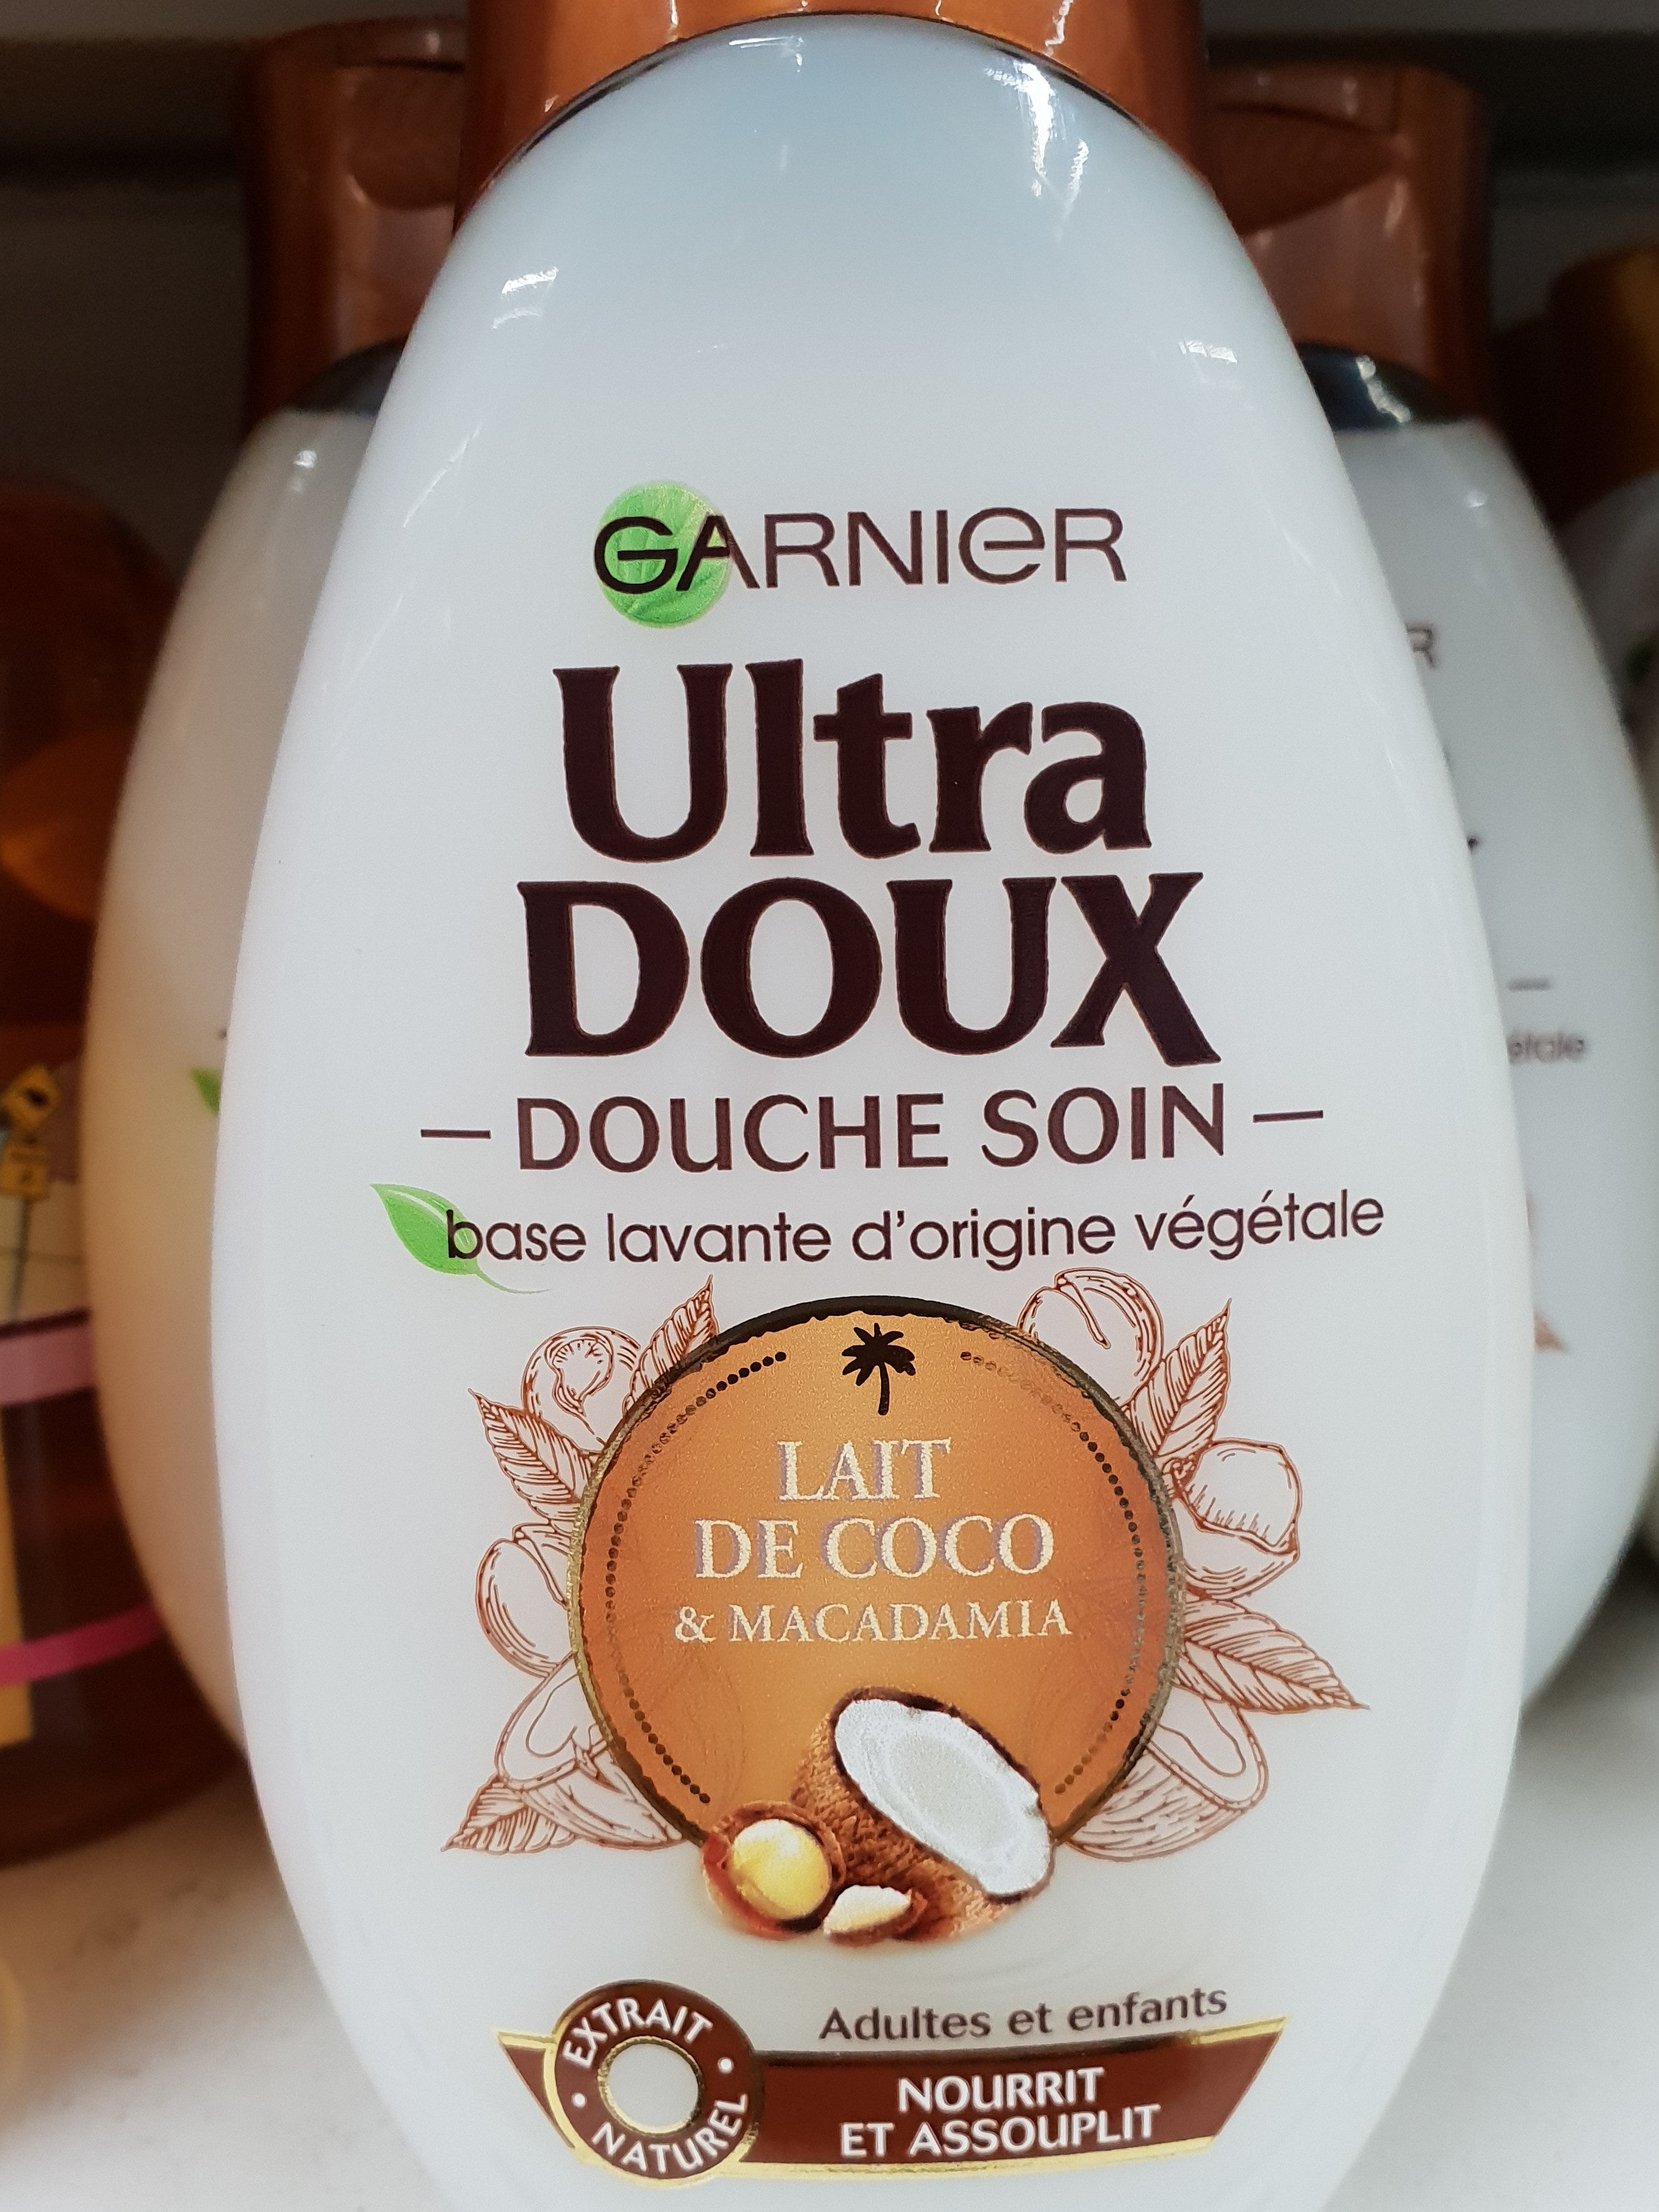 douche soin lait de coco macadamia - Product - fr